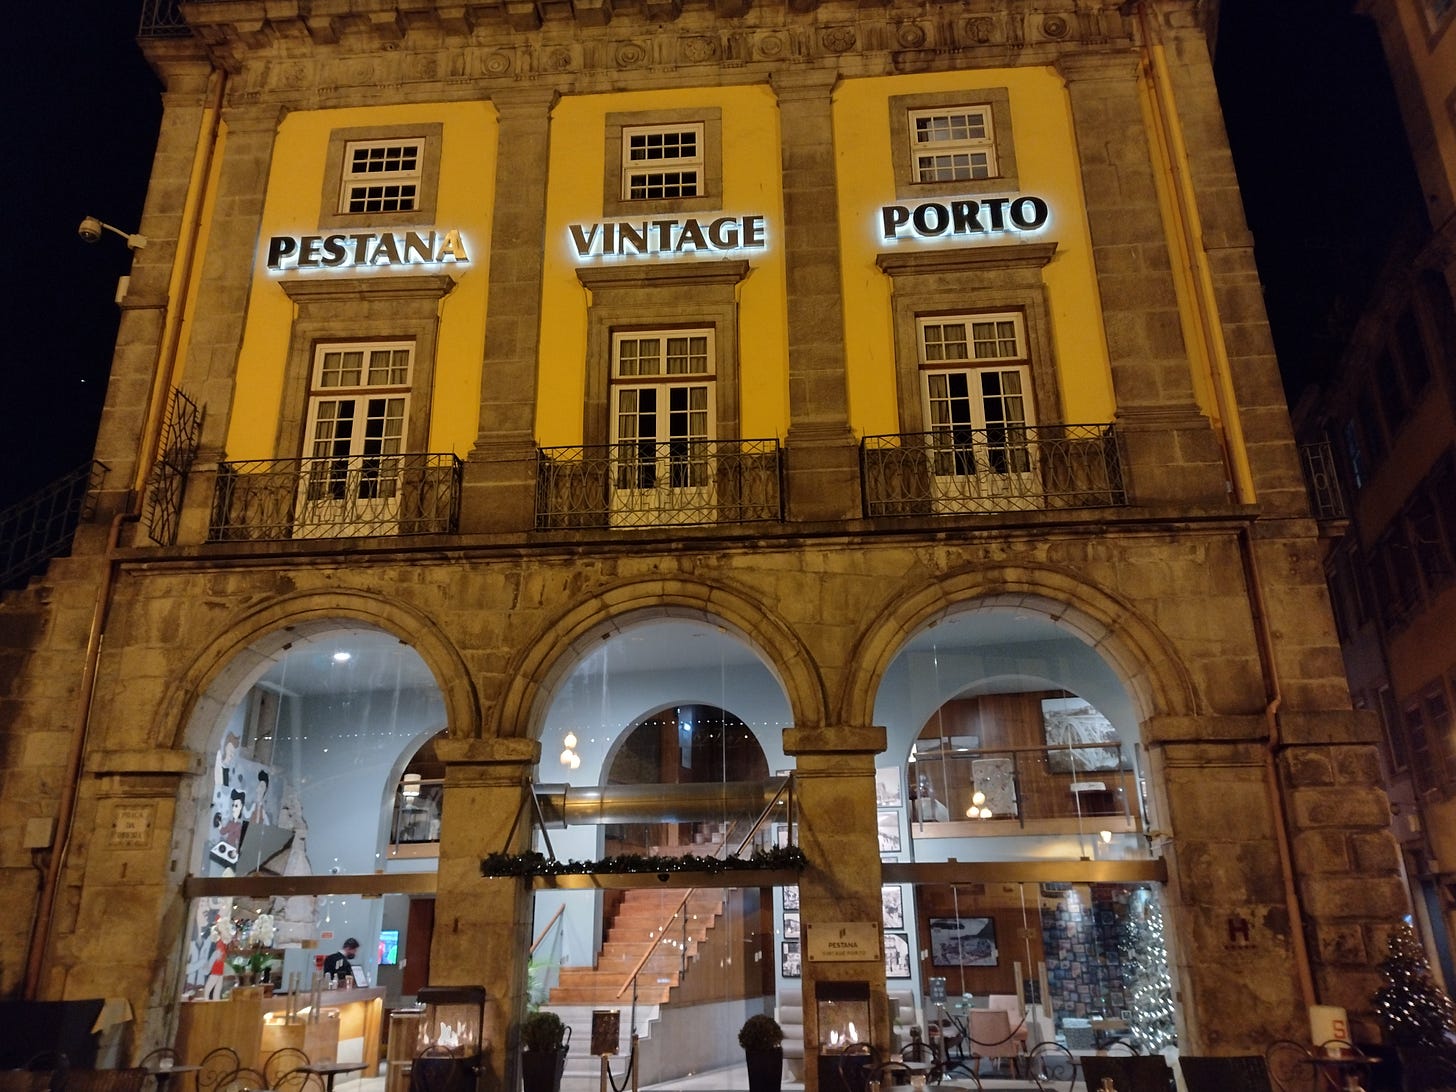 Front of Pestana Vintage Porto Hotel